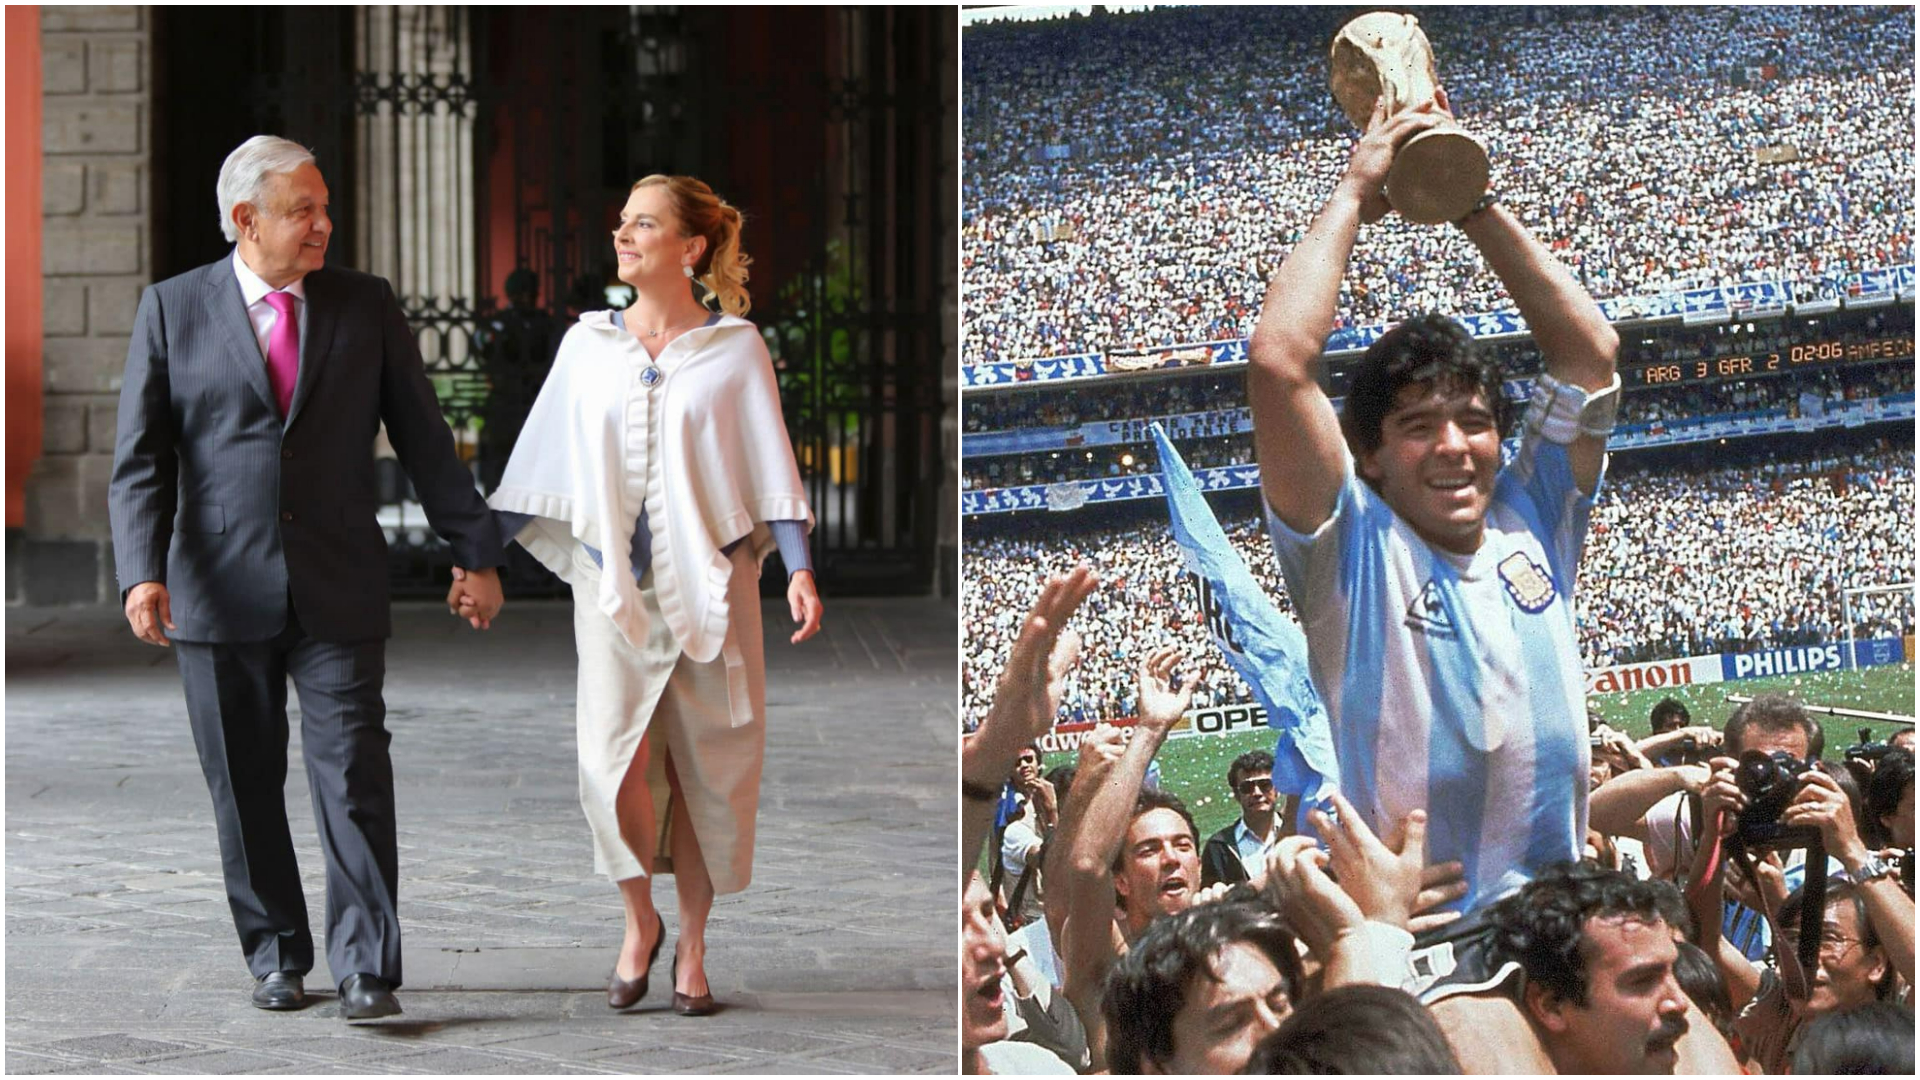 The academic remembered the Argentine idol (Photo: Facebook/Beatriz Gutiérrez Müller/Diego Armando Maradona)